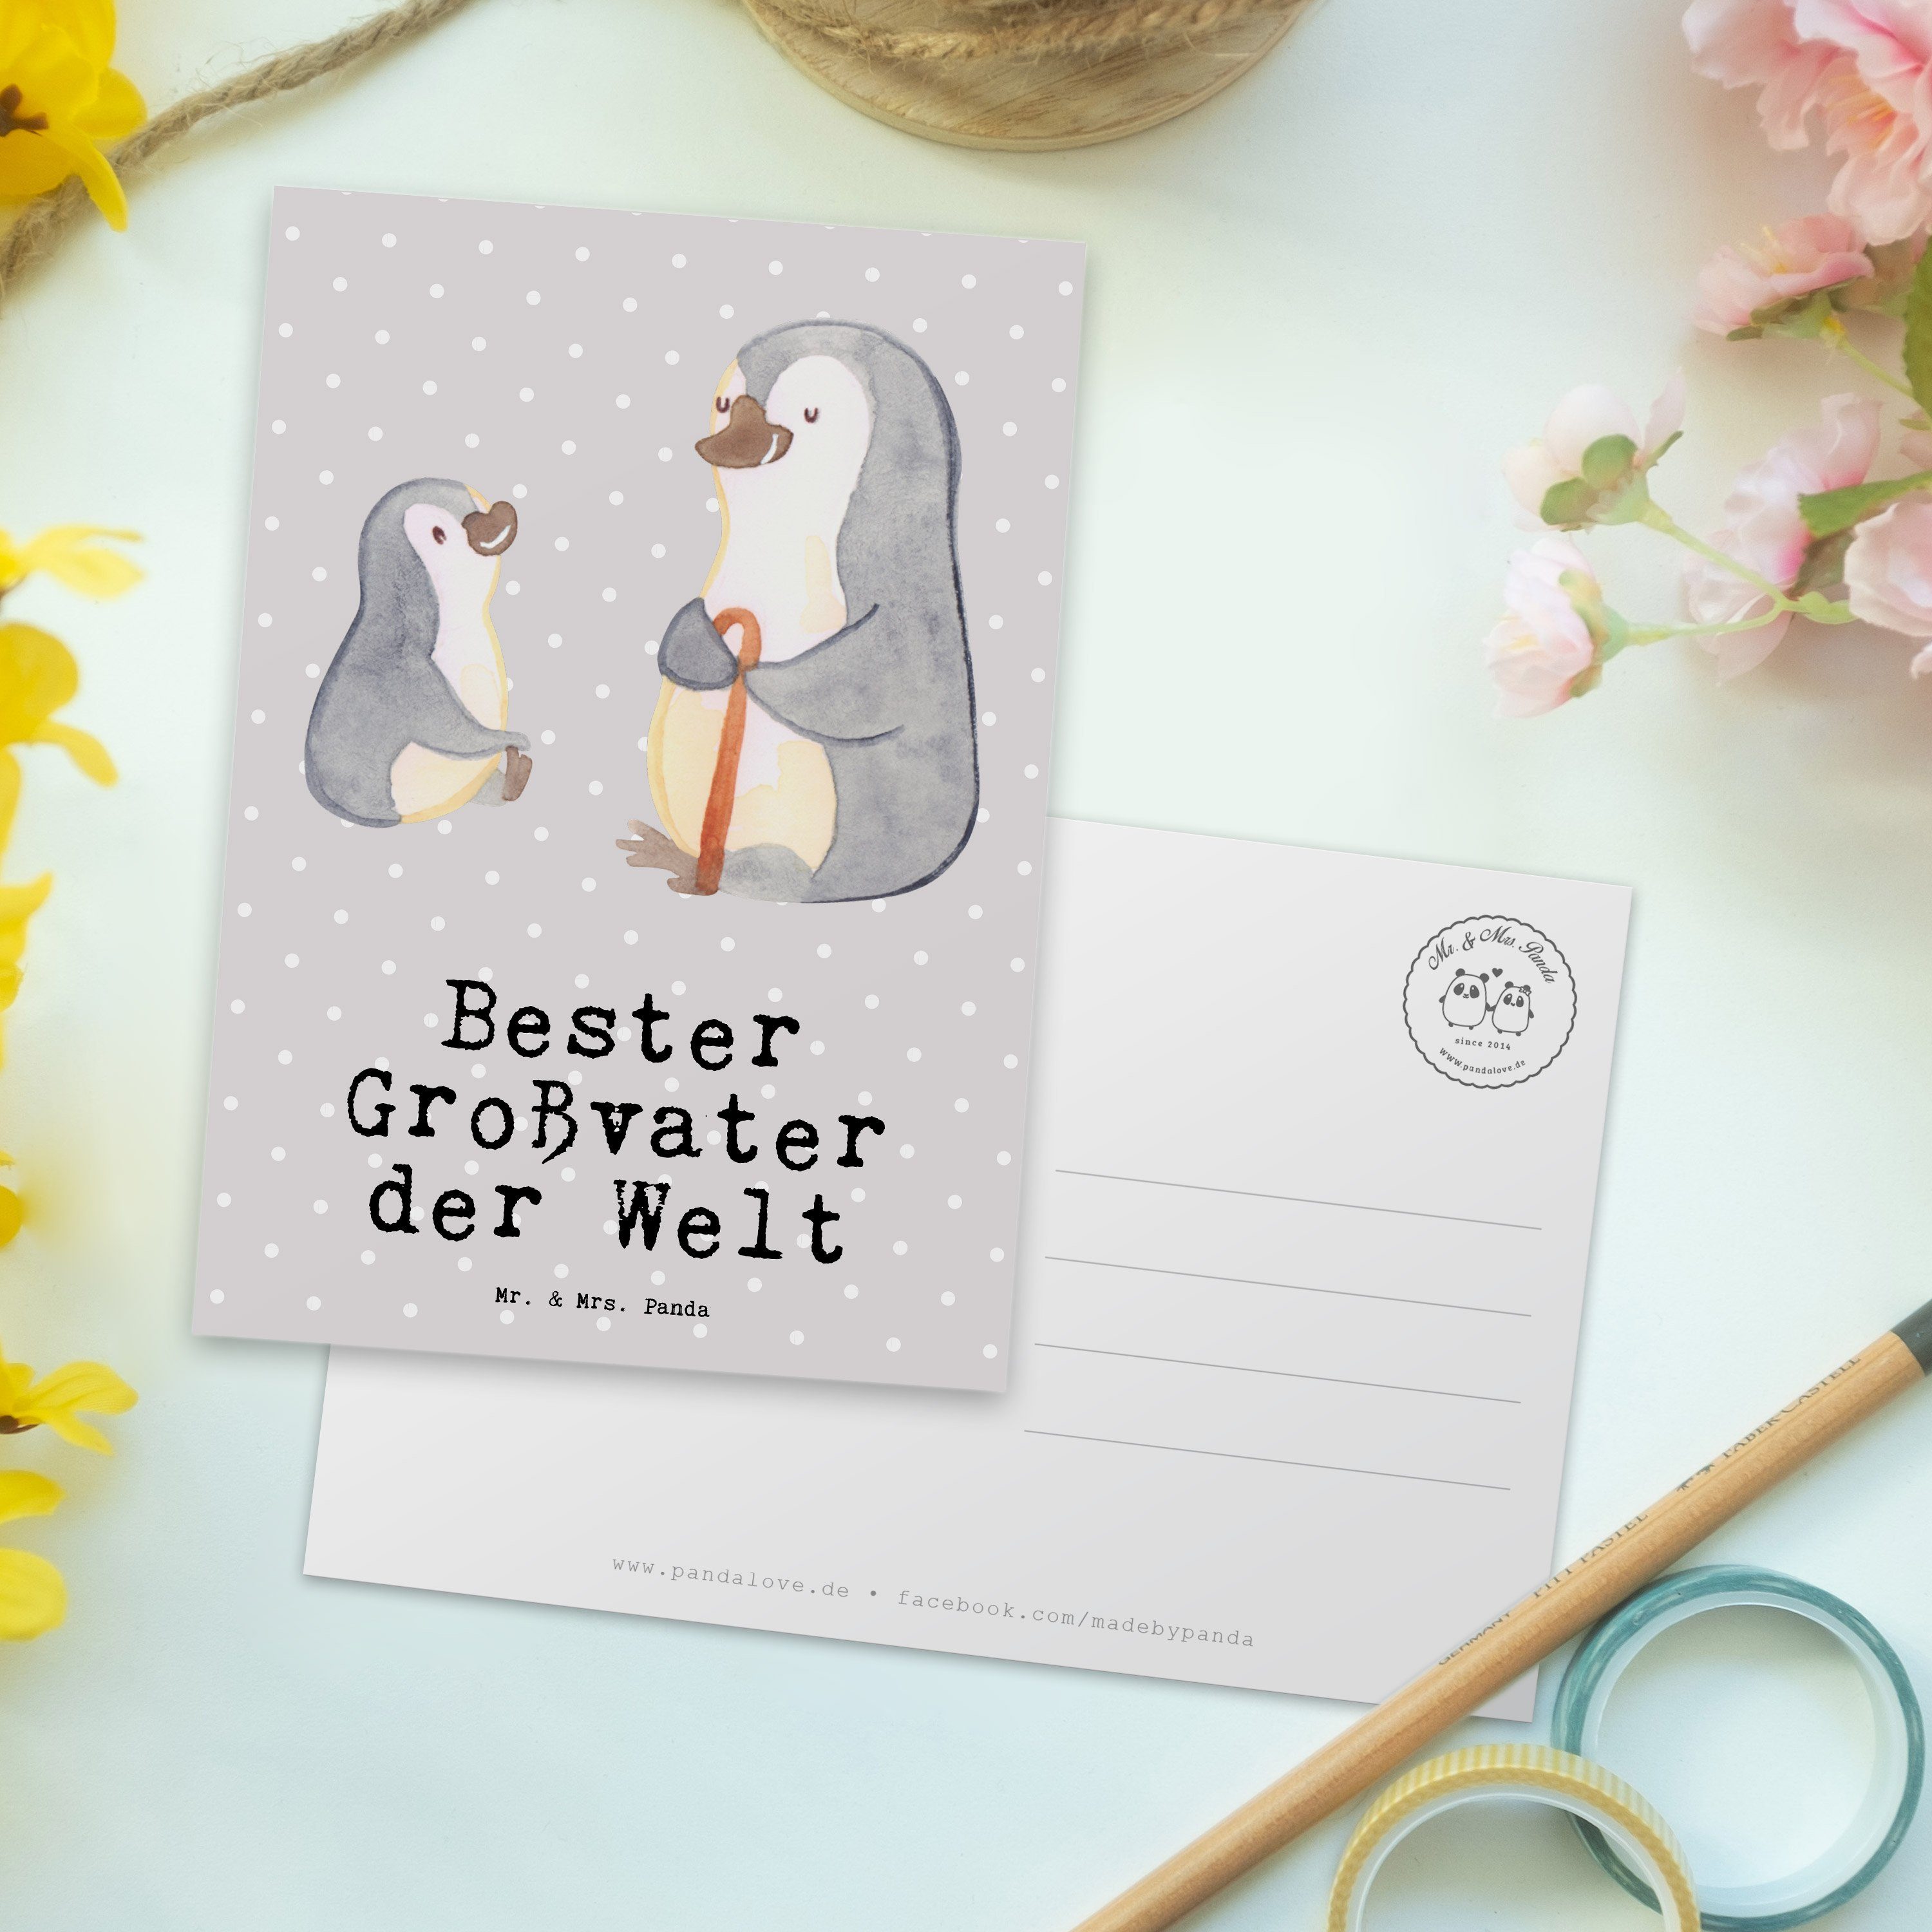 Pinguin Welt - Mrs. Mr. & Postkarte Geschenk, Bester Grau Pastell Dankeska - Großvater Panda der